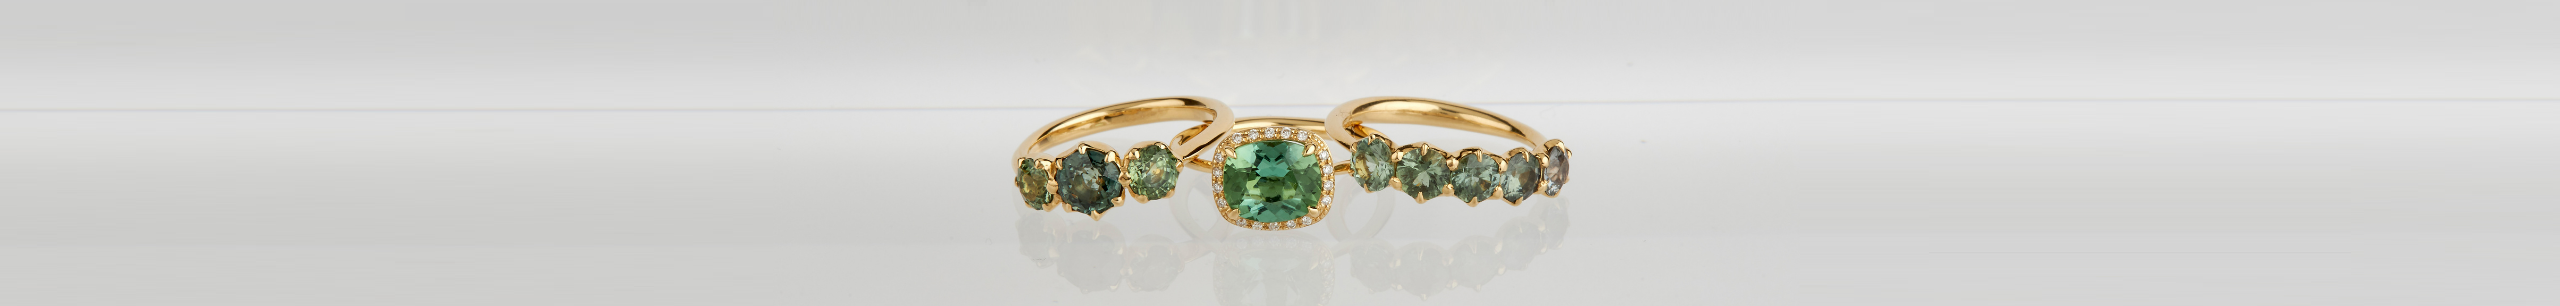 Green Gemstone Rings